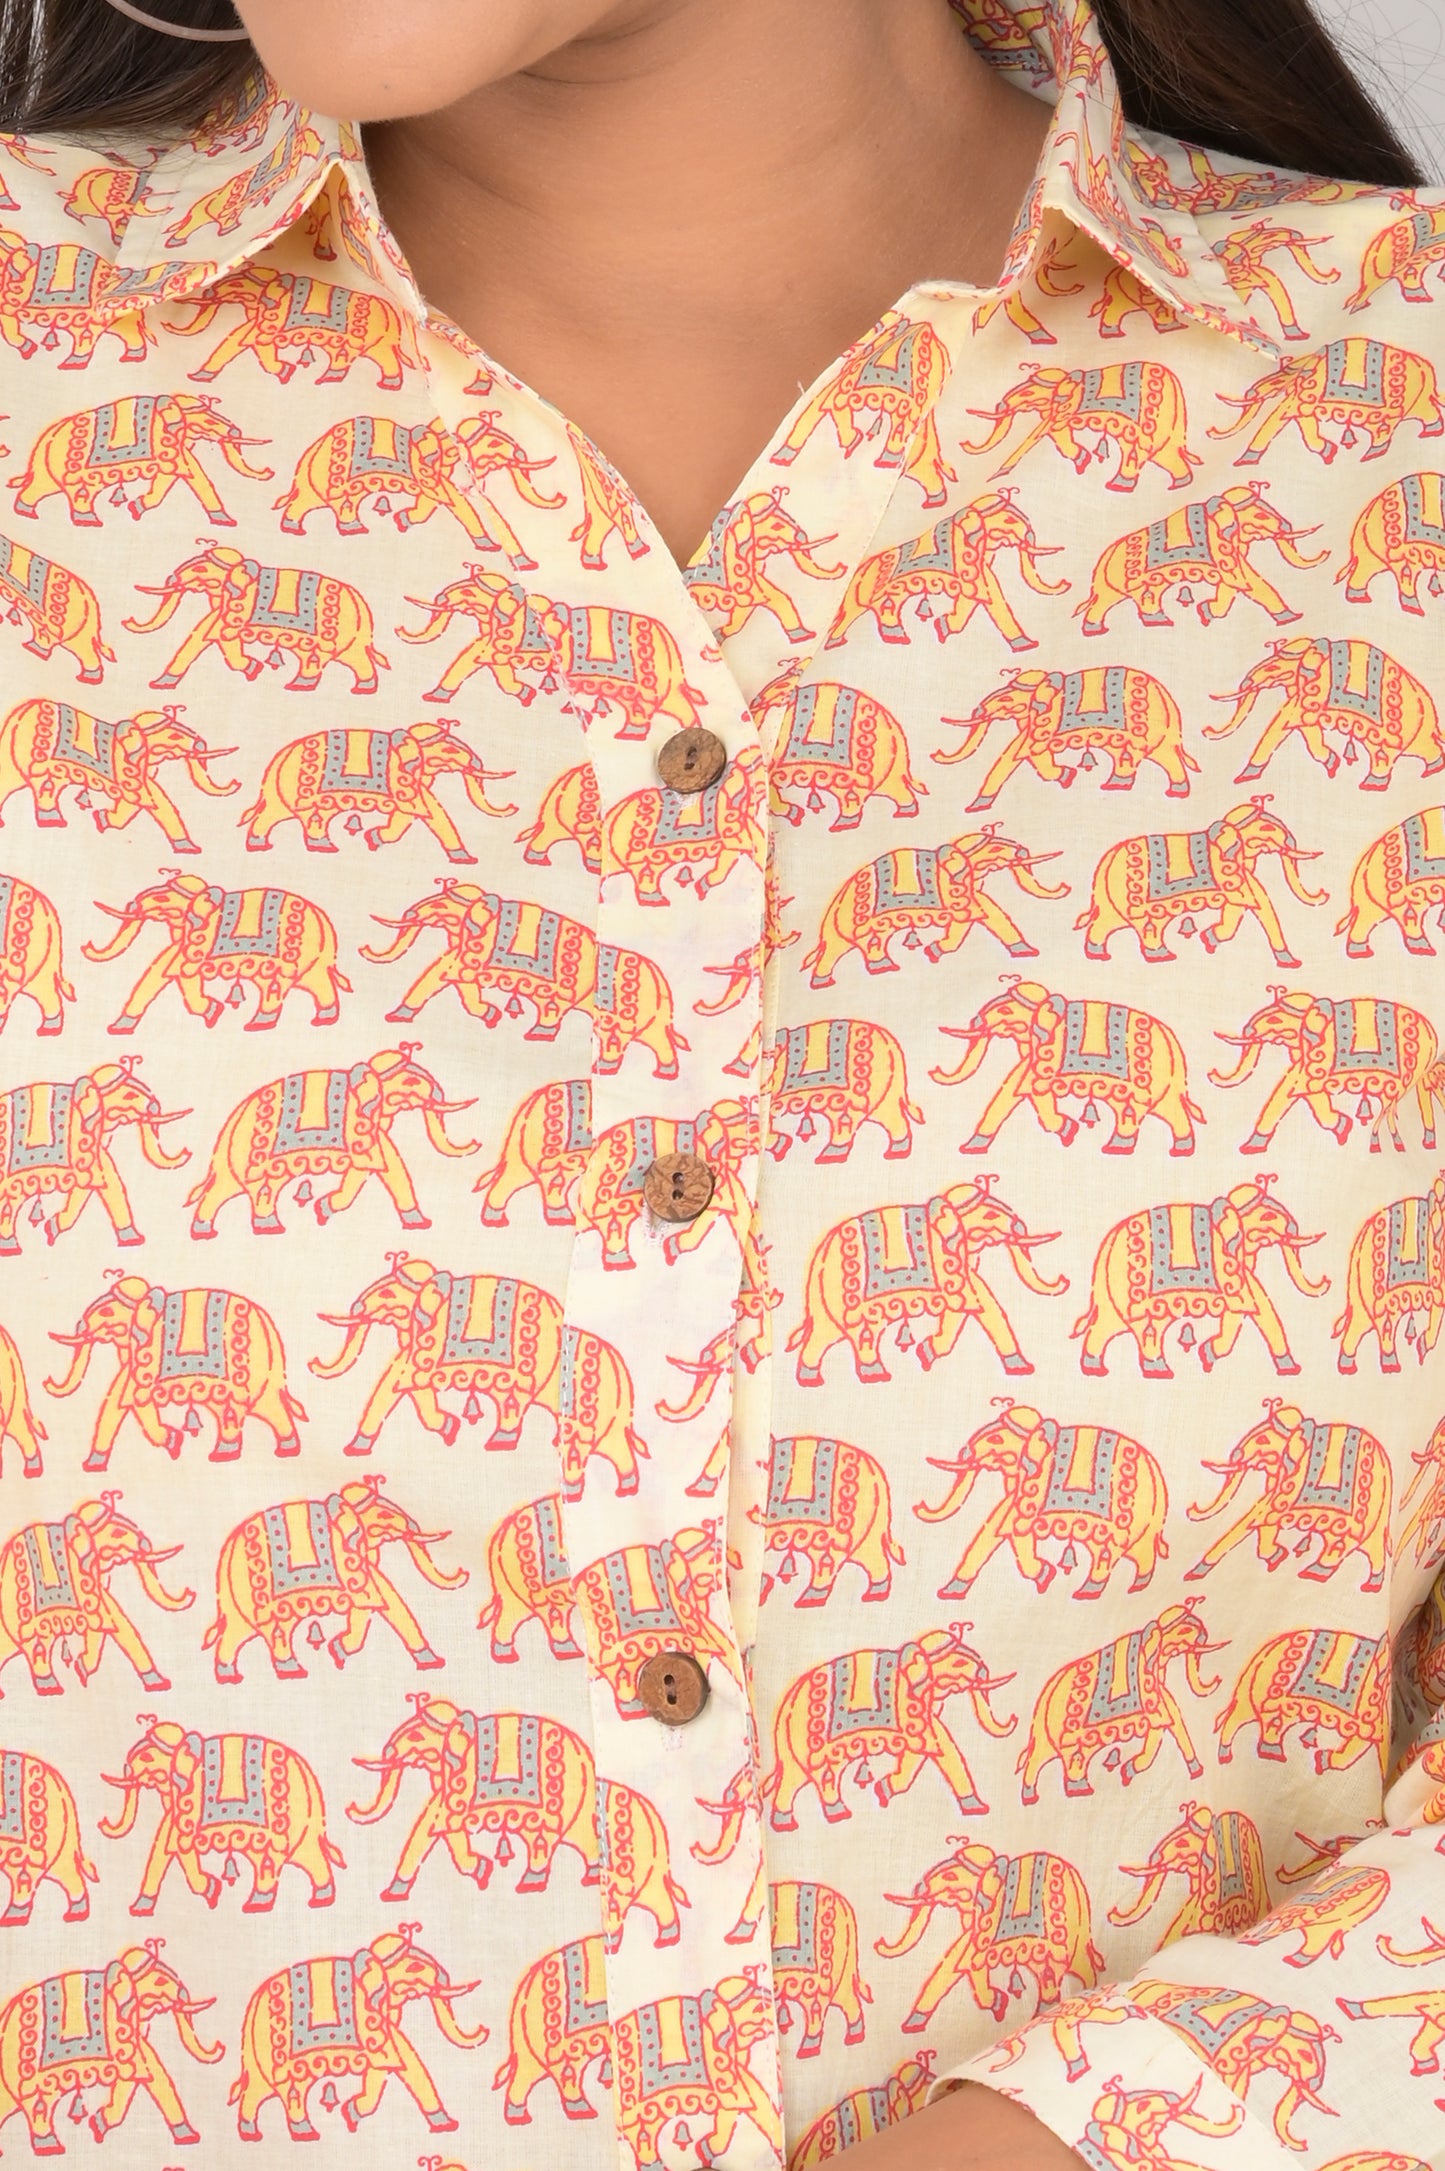 Women's Ethnic Elephant Printed Shirts